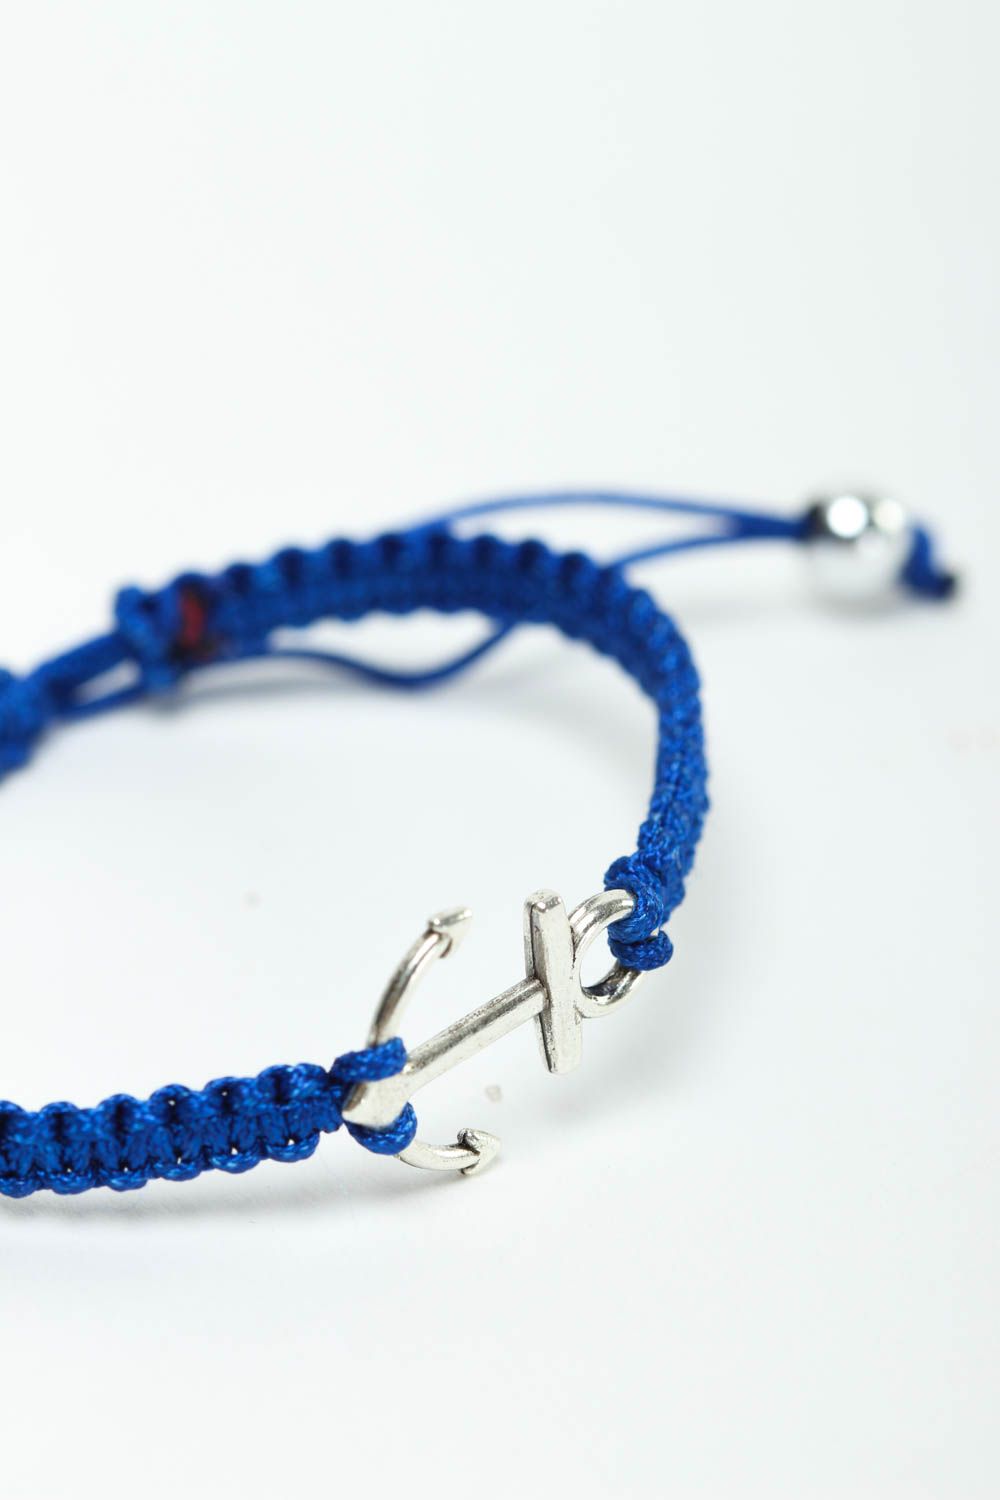 Stylish handmade wrist bracelet designs textile friendship bracelet fashion tips photo 3